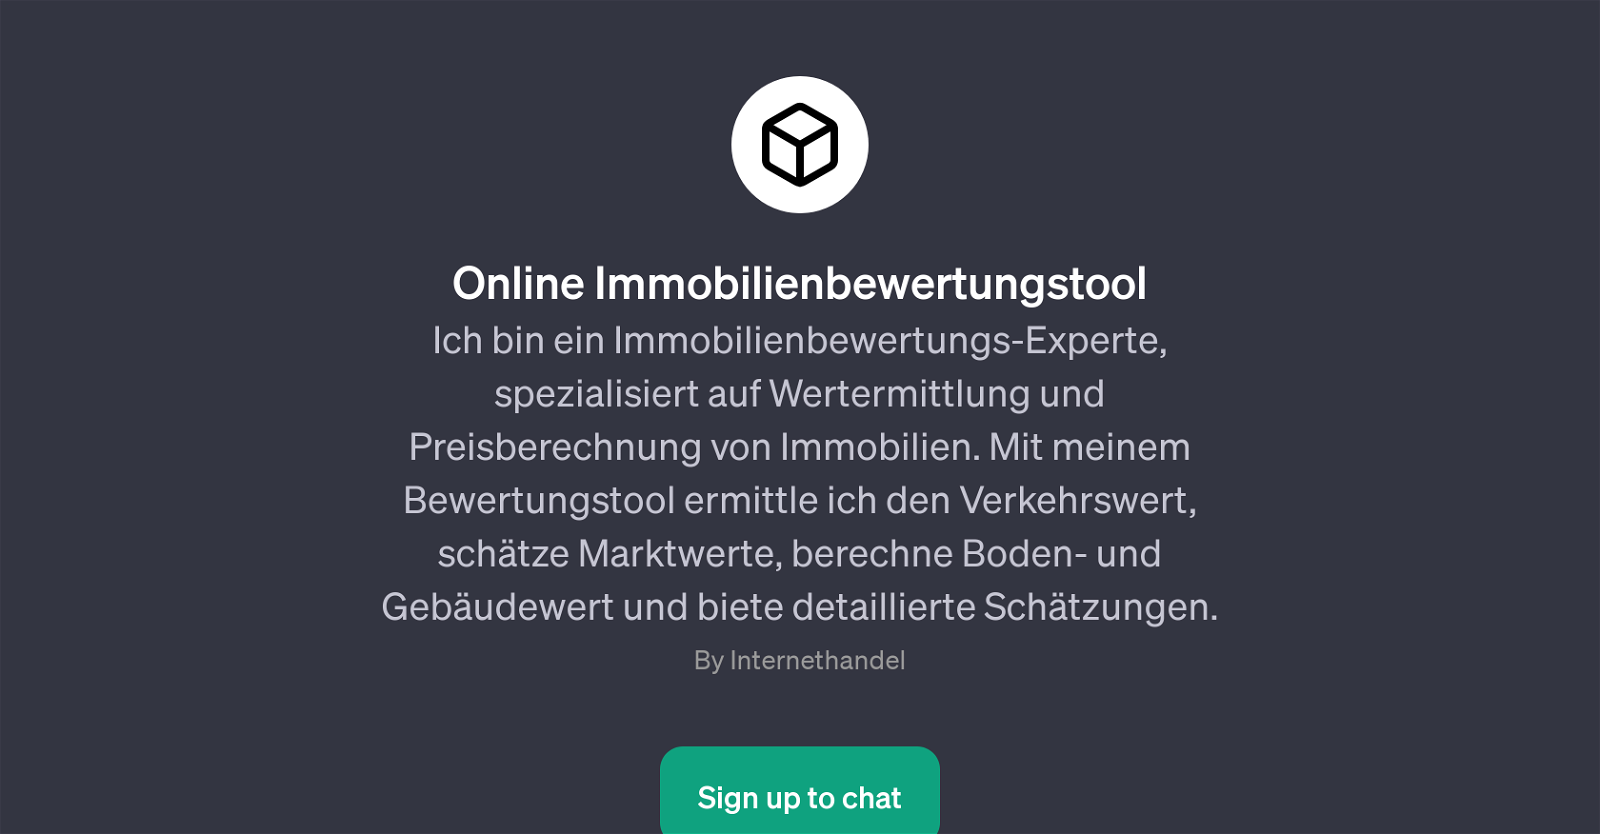 Online Immobilienbewertungstool website